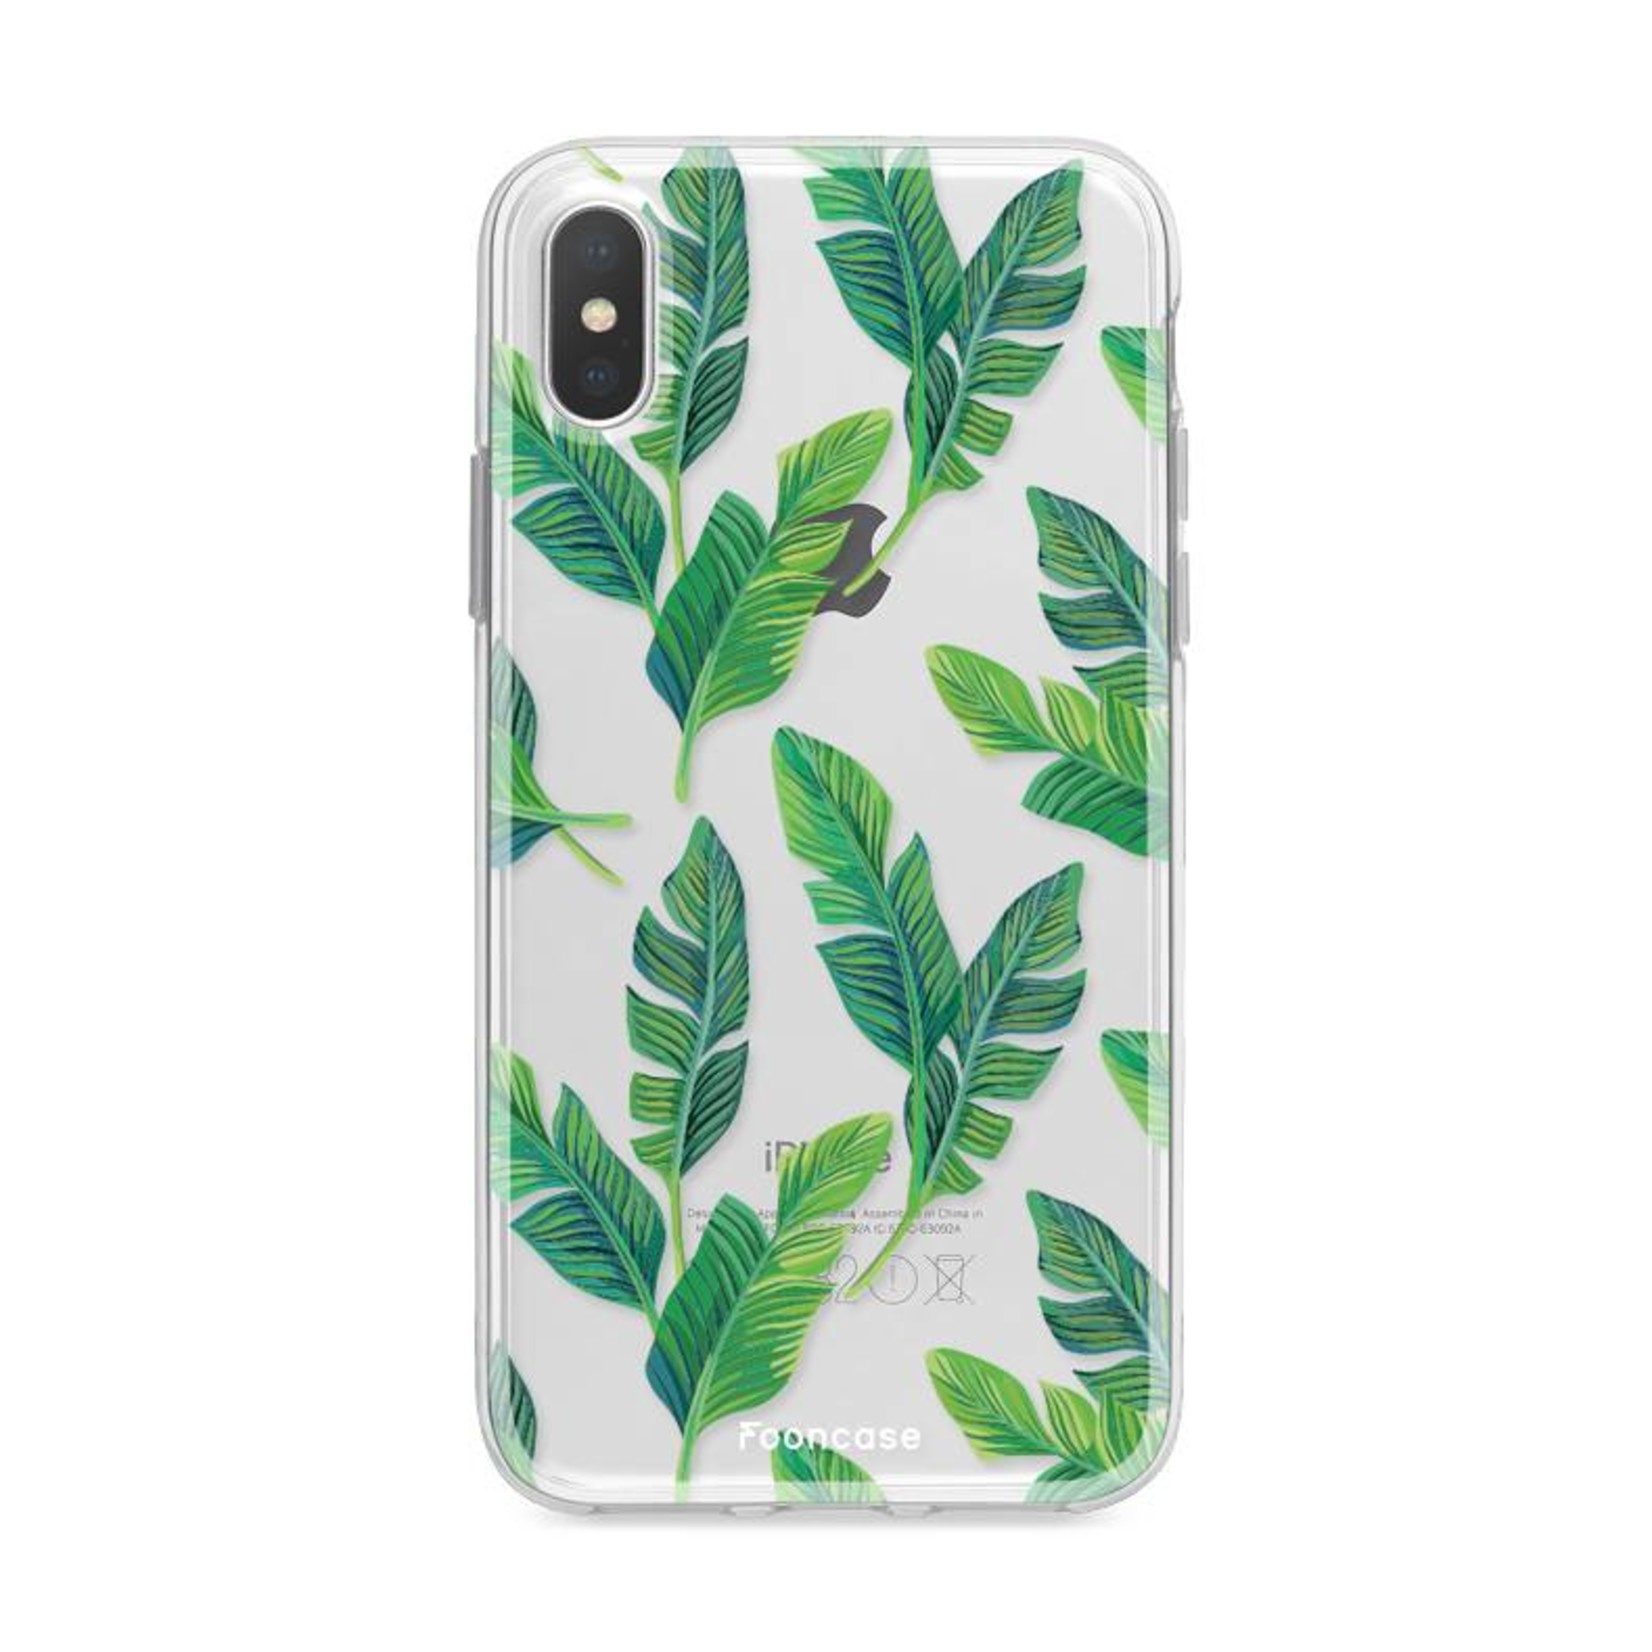 FOONCASE Iphone XS Max Case - Banana leaves